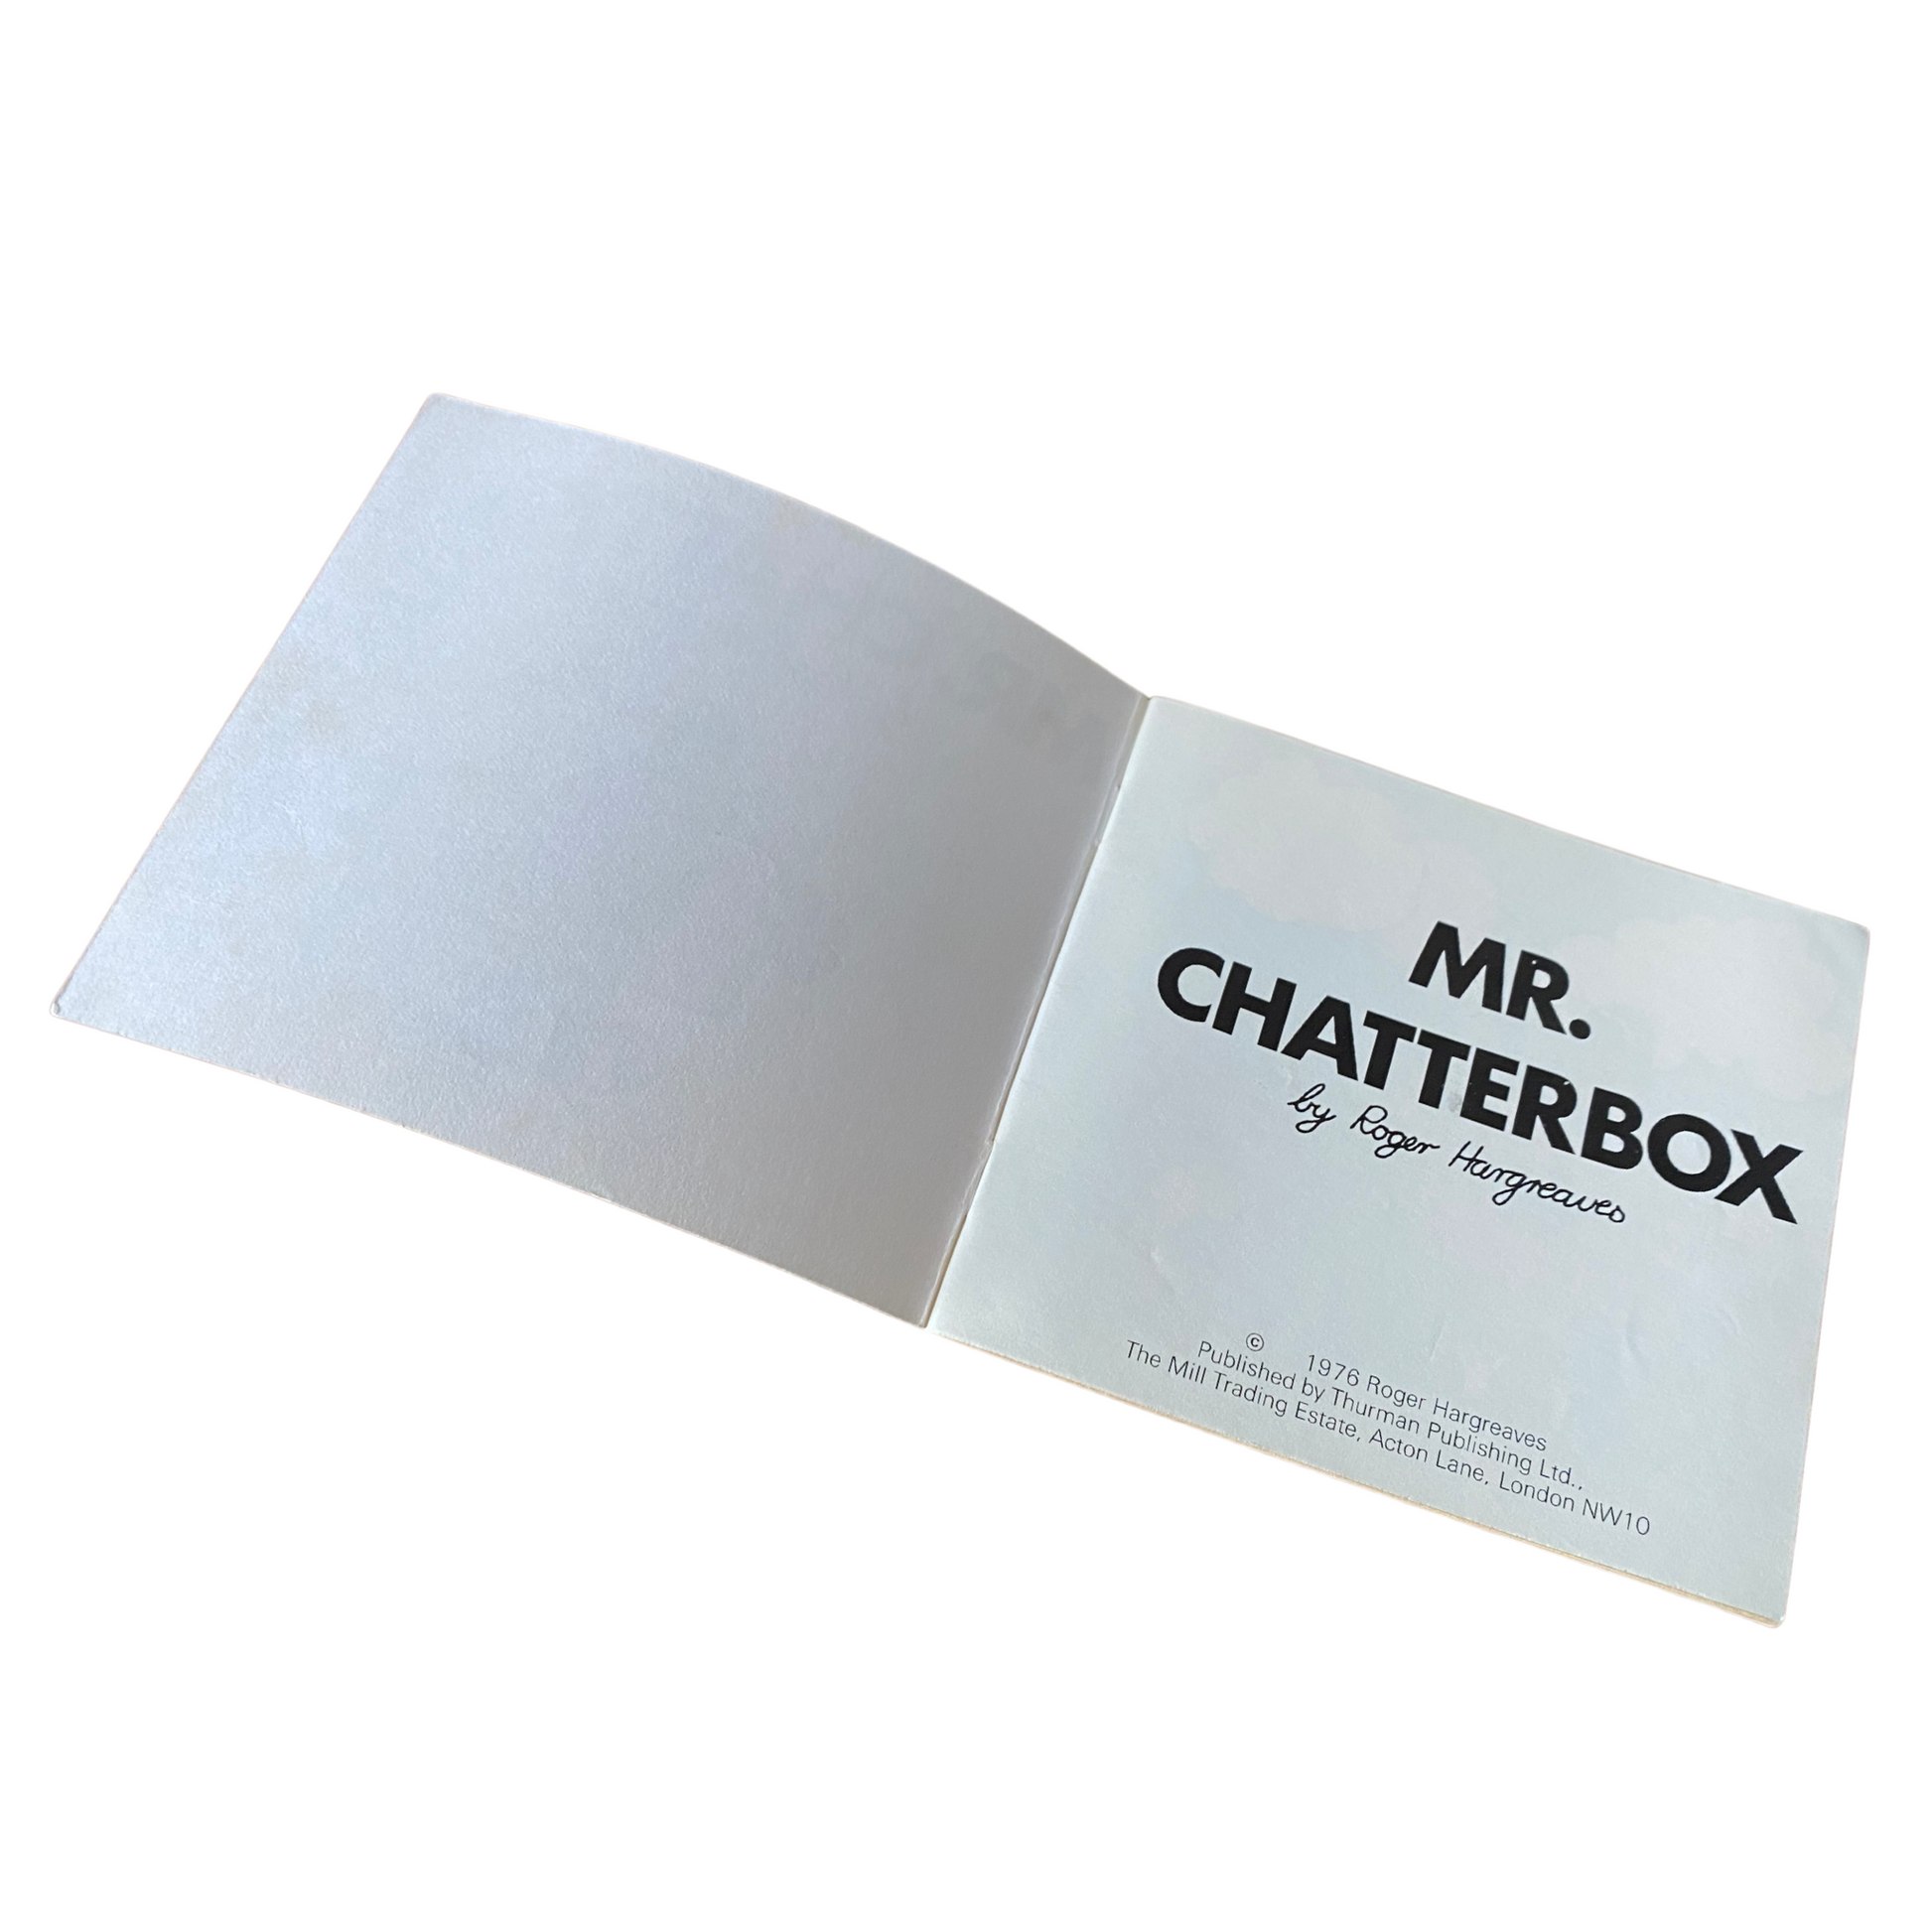 Classic Mr. Men Book -   Mr Chatterbox    - 1970s Edition